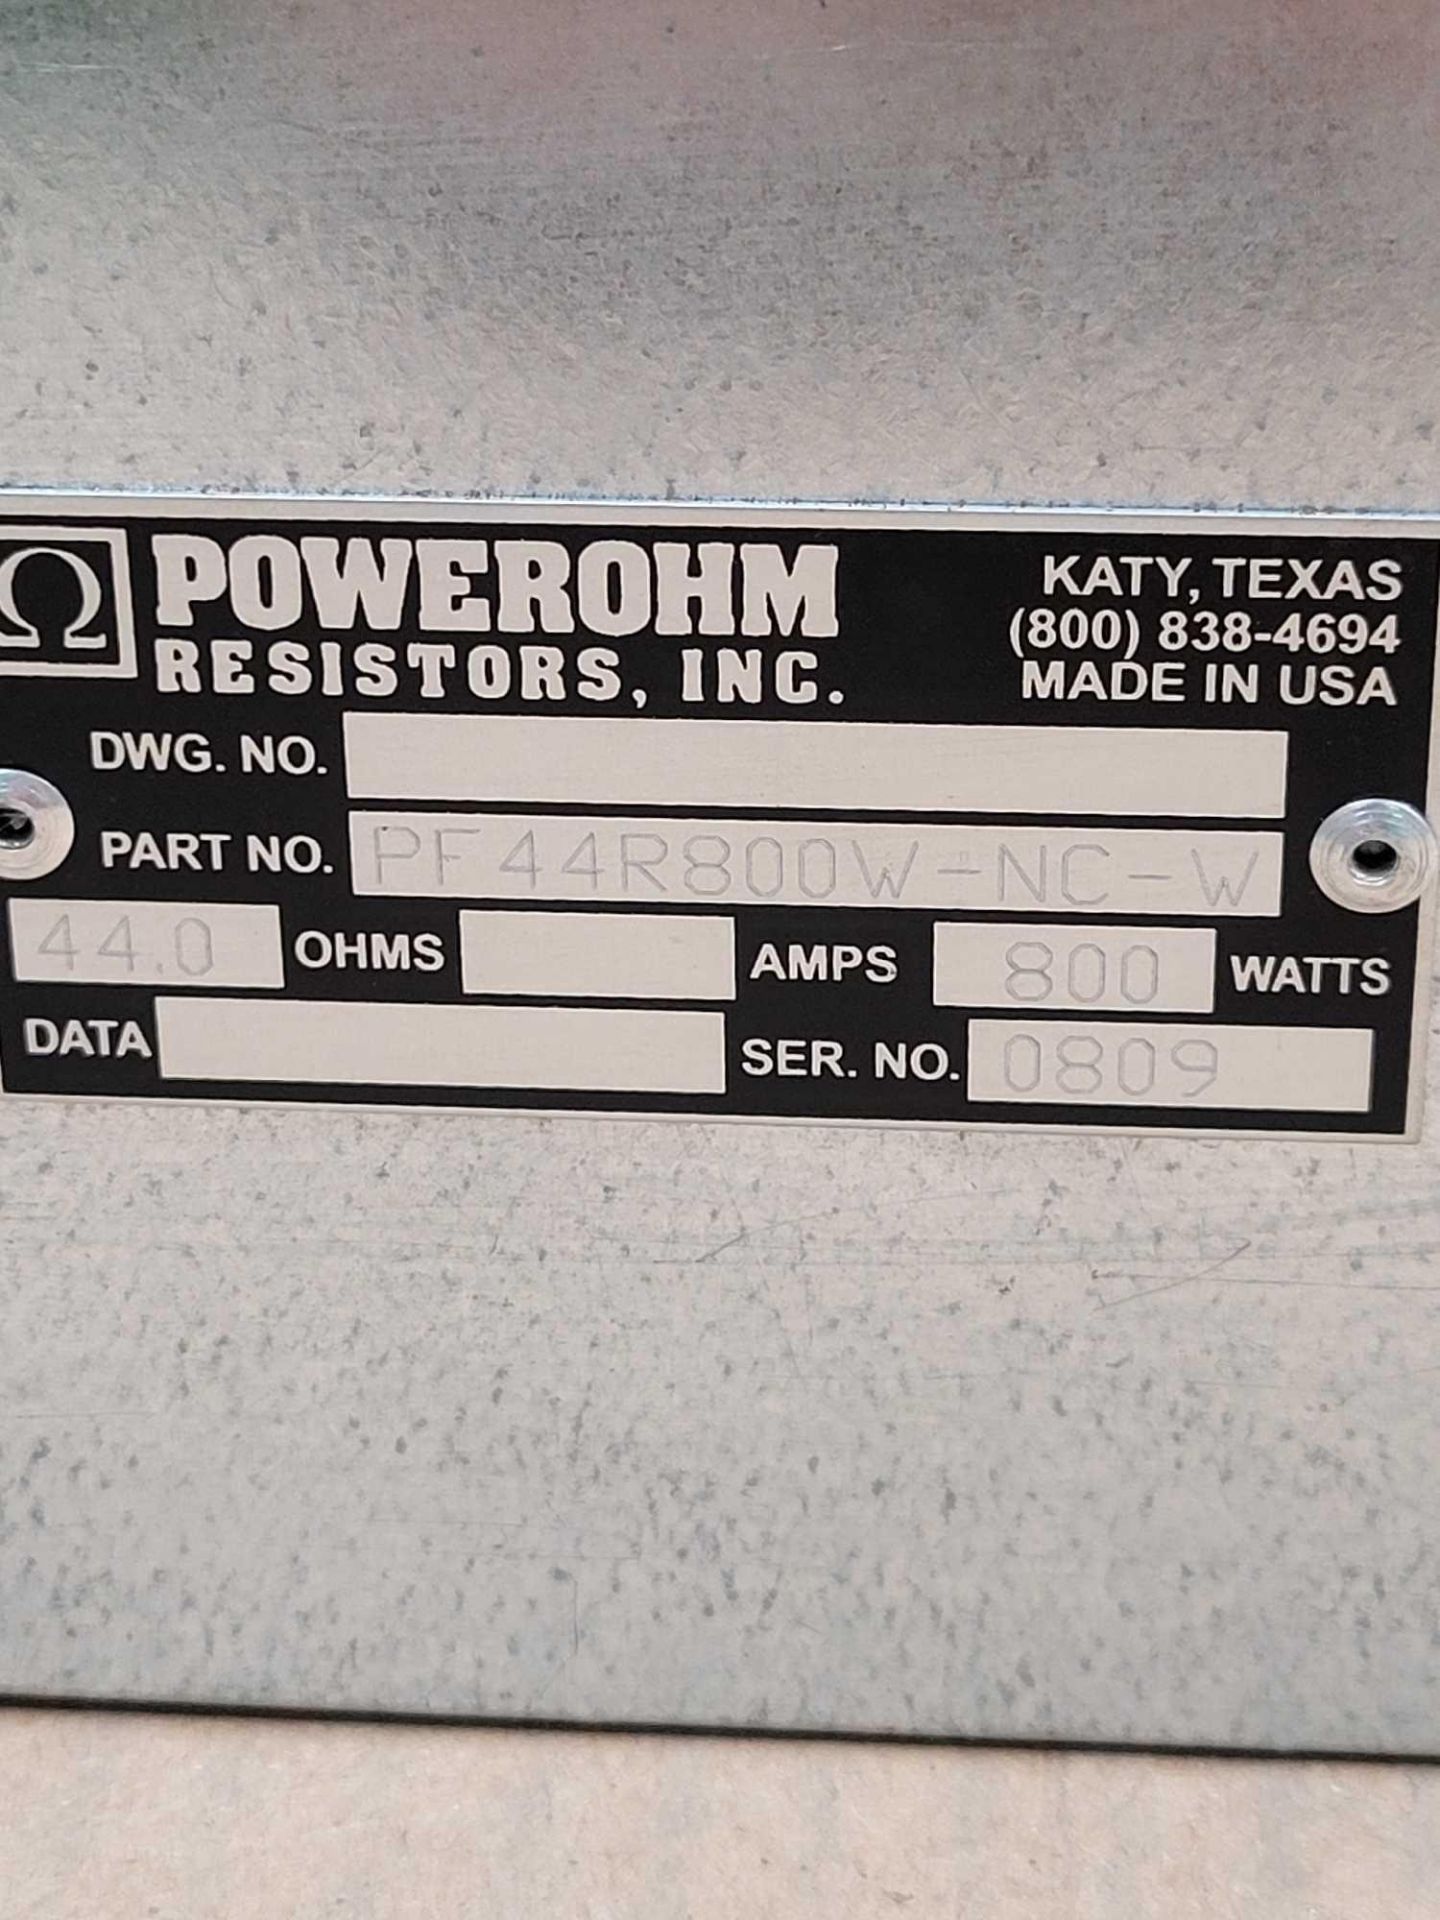 LOT OF 2 POWEROHM PF44R800W-NC-W / Braking Resistor  /  Lot Weight: 15.8 - Image 2 of 6